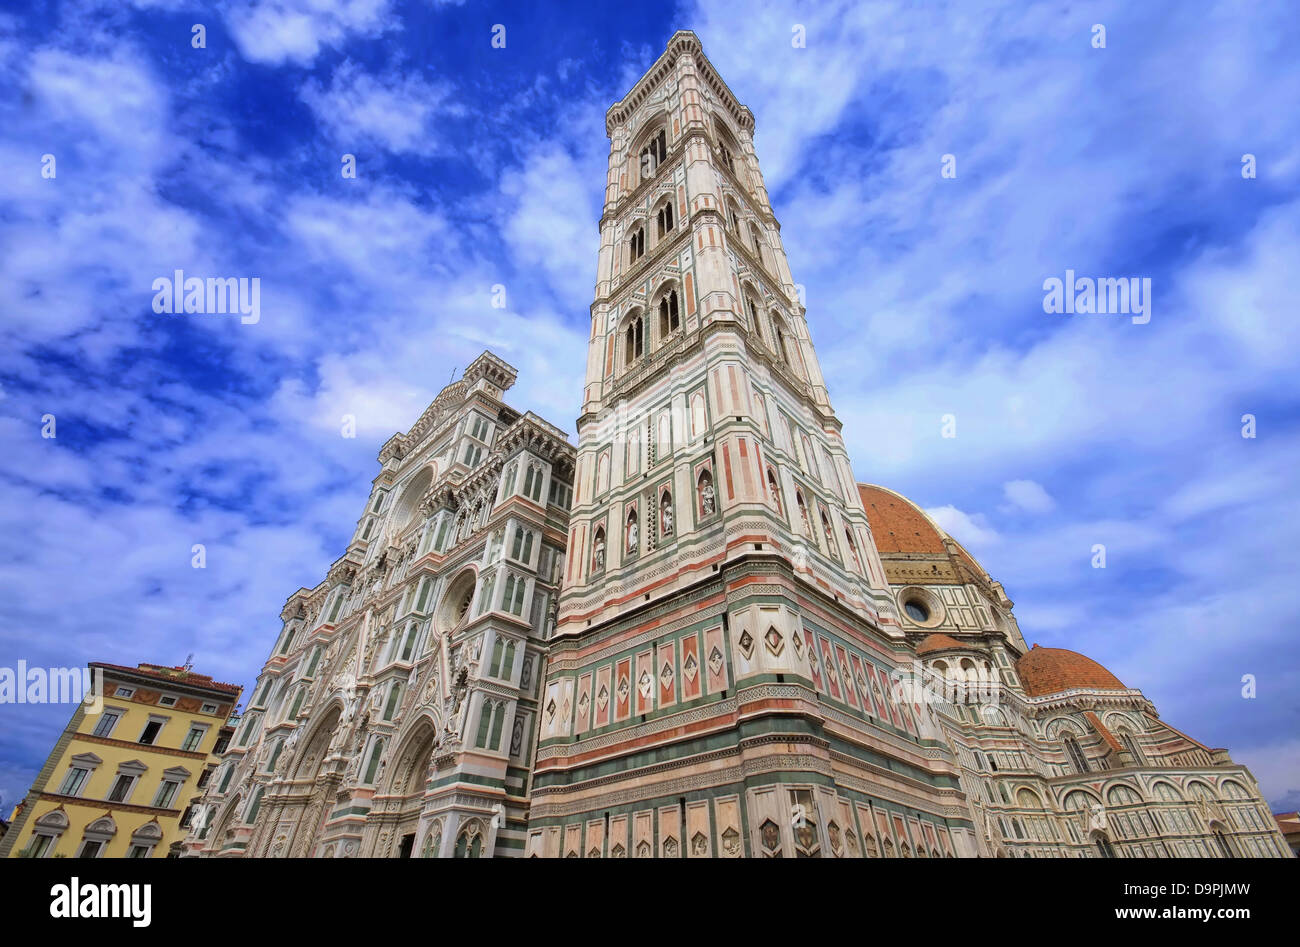 Florenz Dom - Duomo Firenze 06 Foto Stock